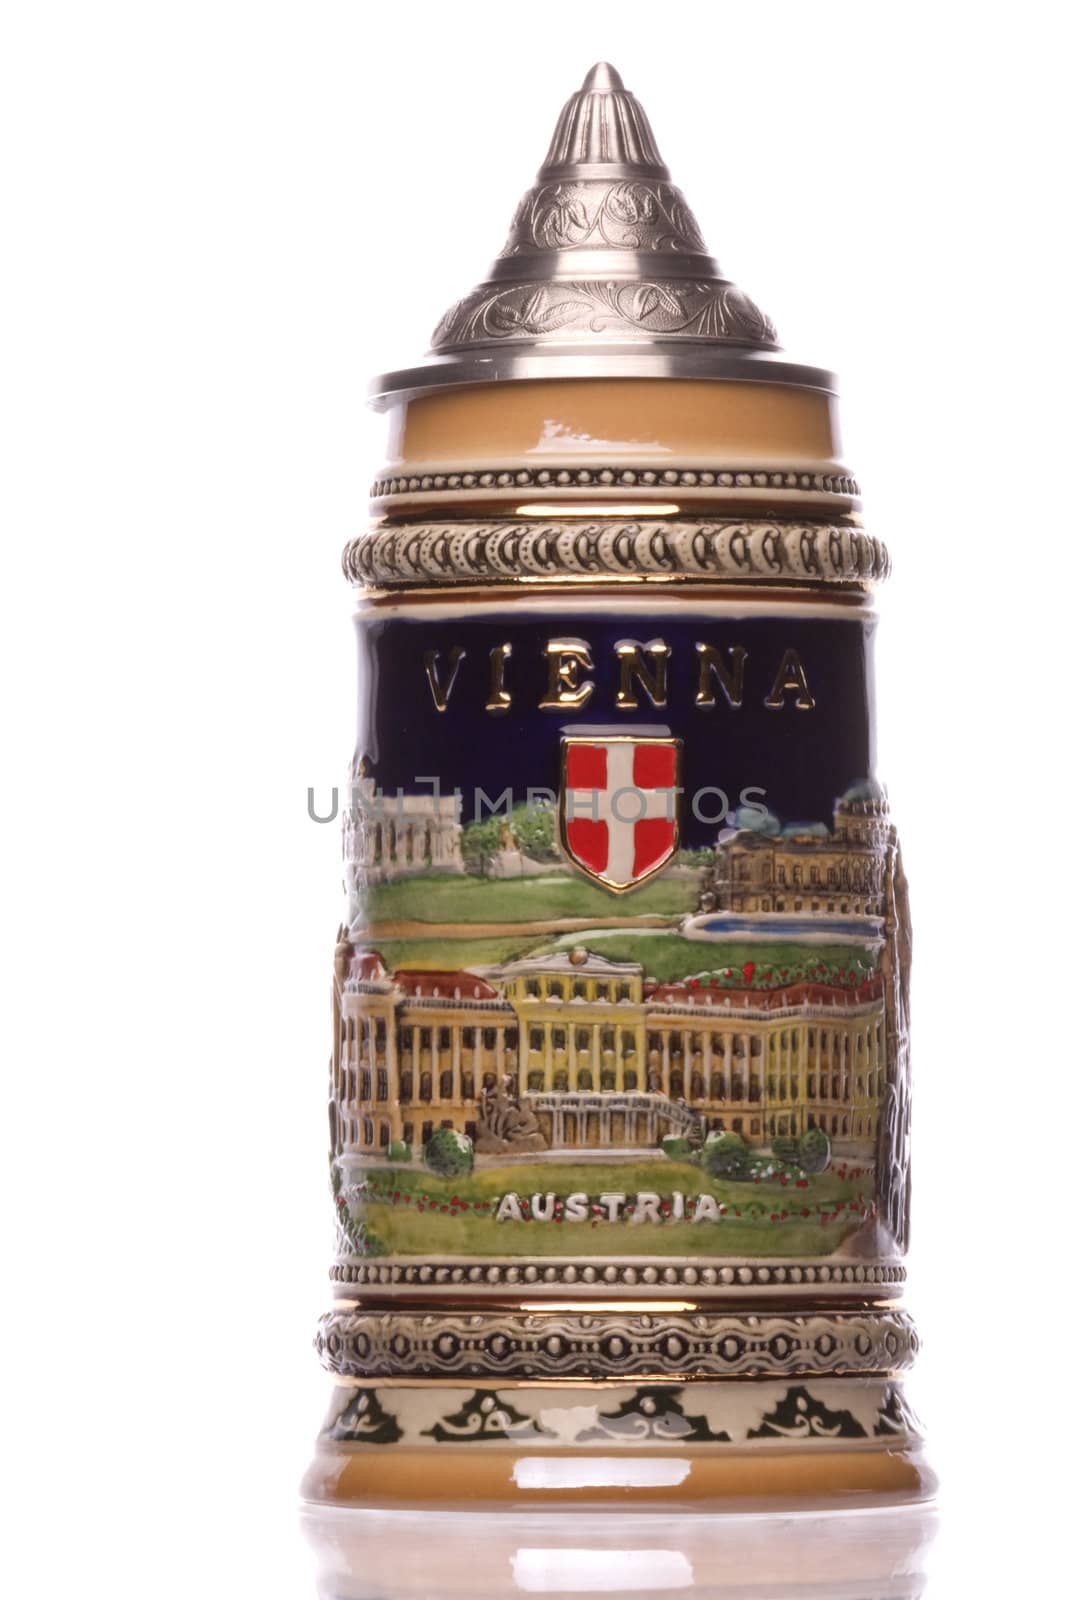 Isolated image of an Austrian beer mug.